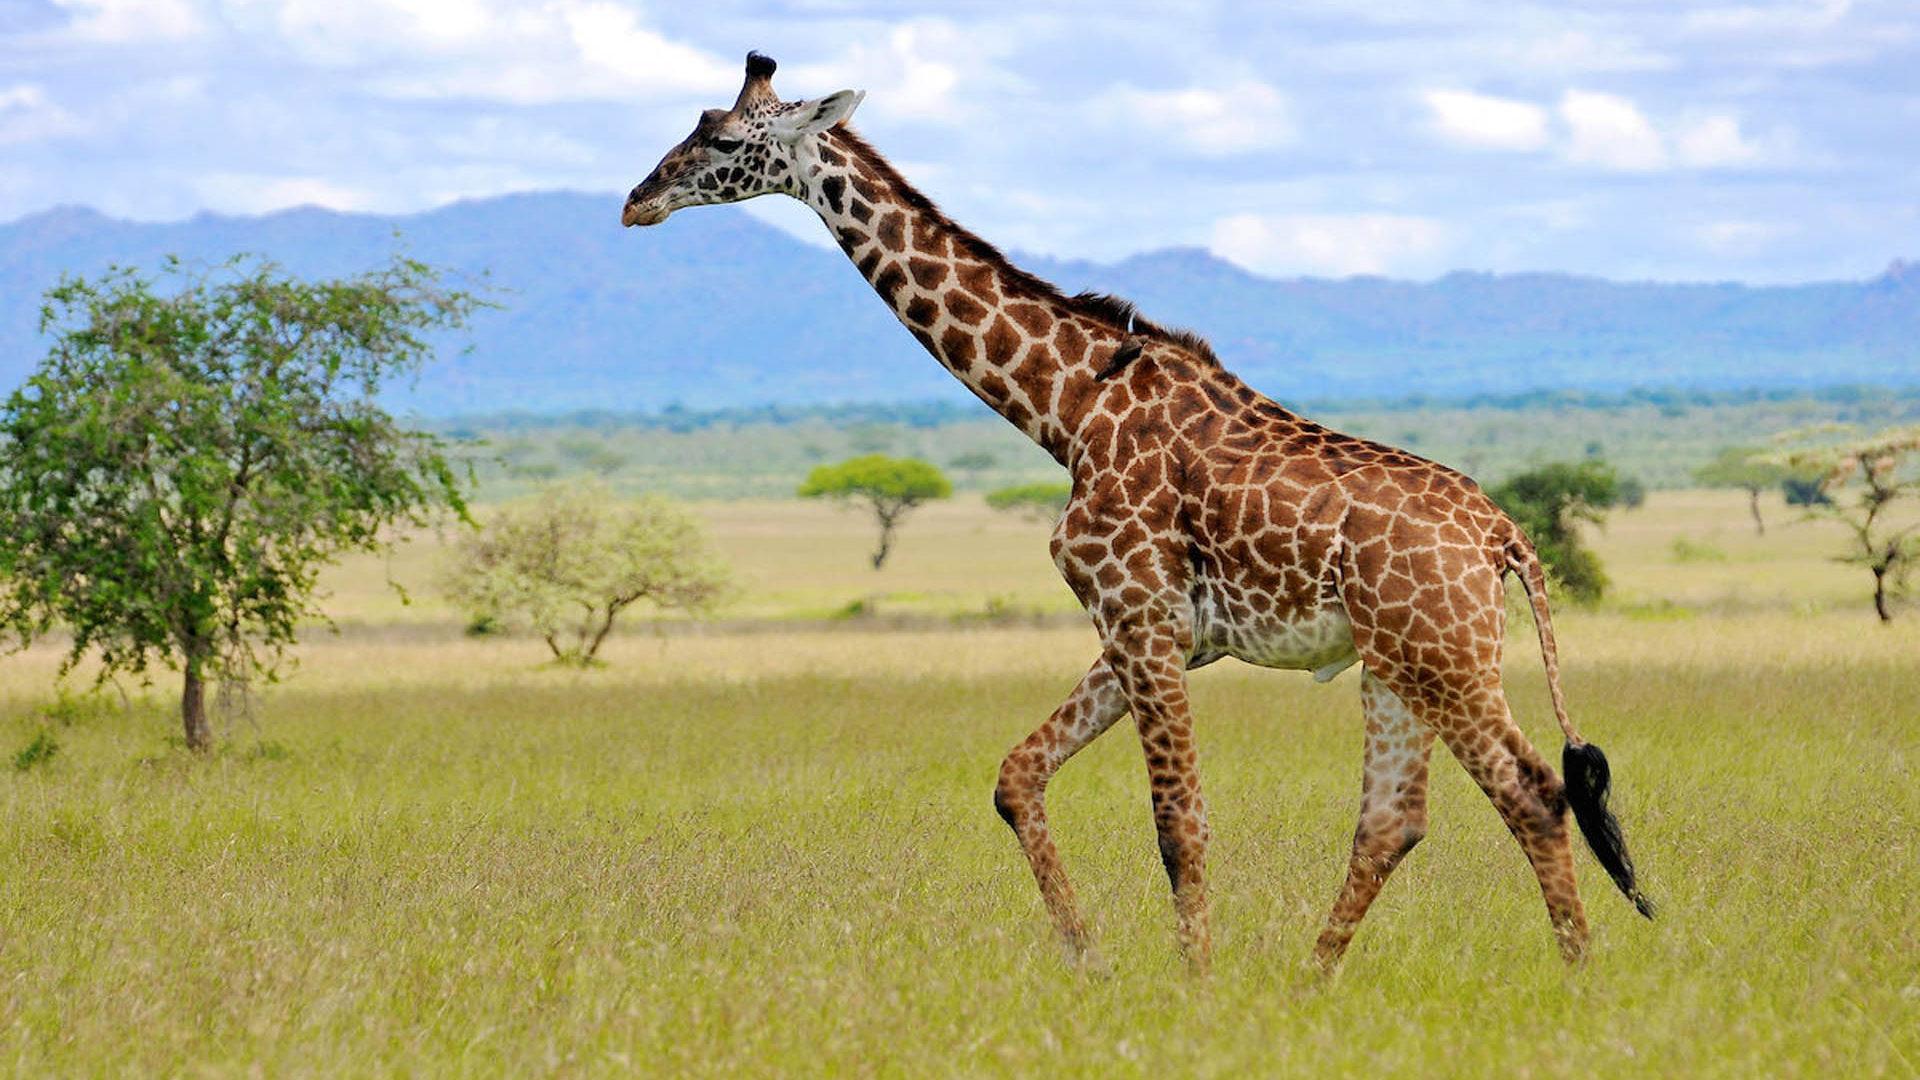 Giraffe family, African wildlife, Tall creature, Nature's marvel, 1920x1080 Full HD Desktop